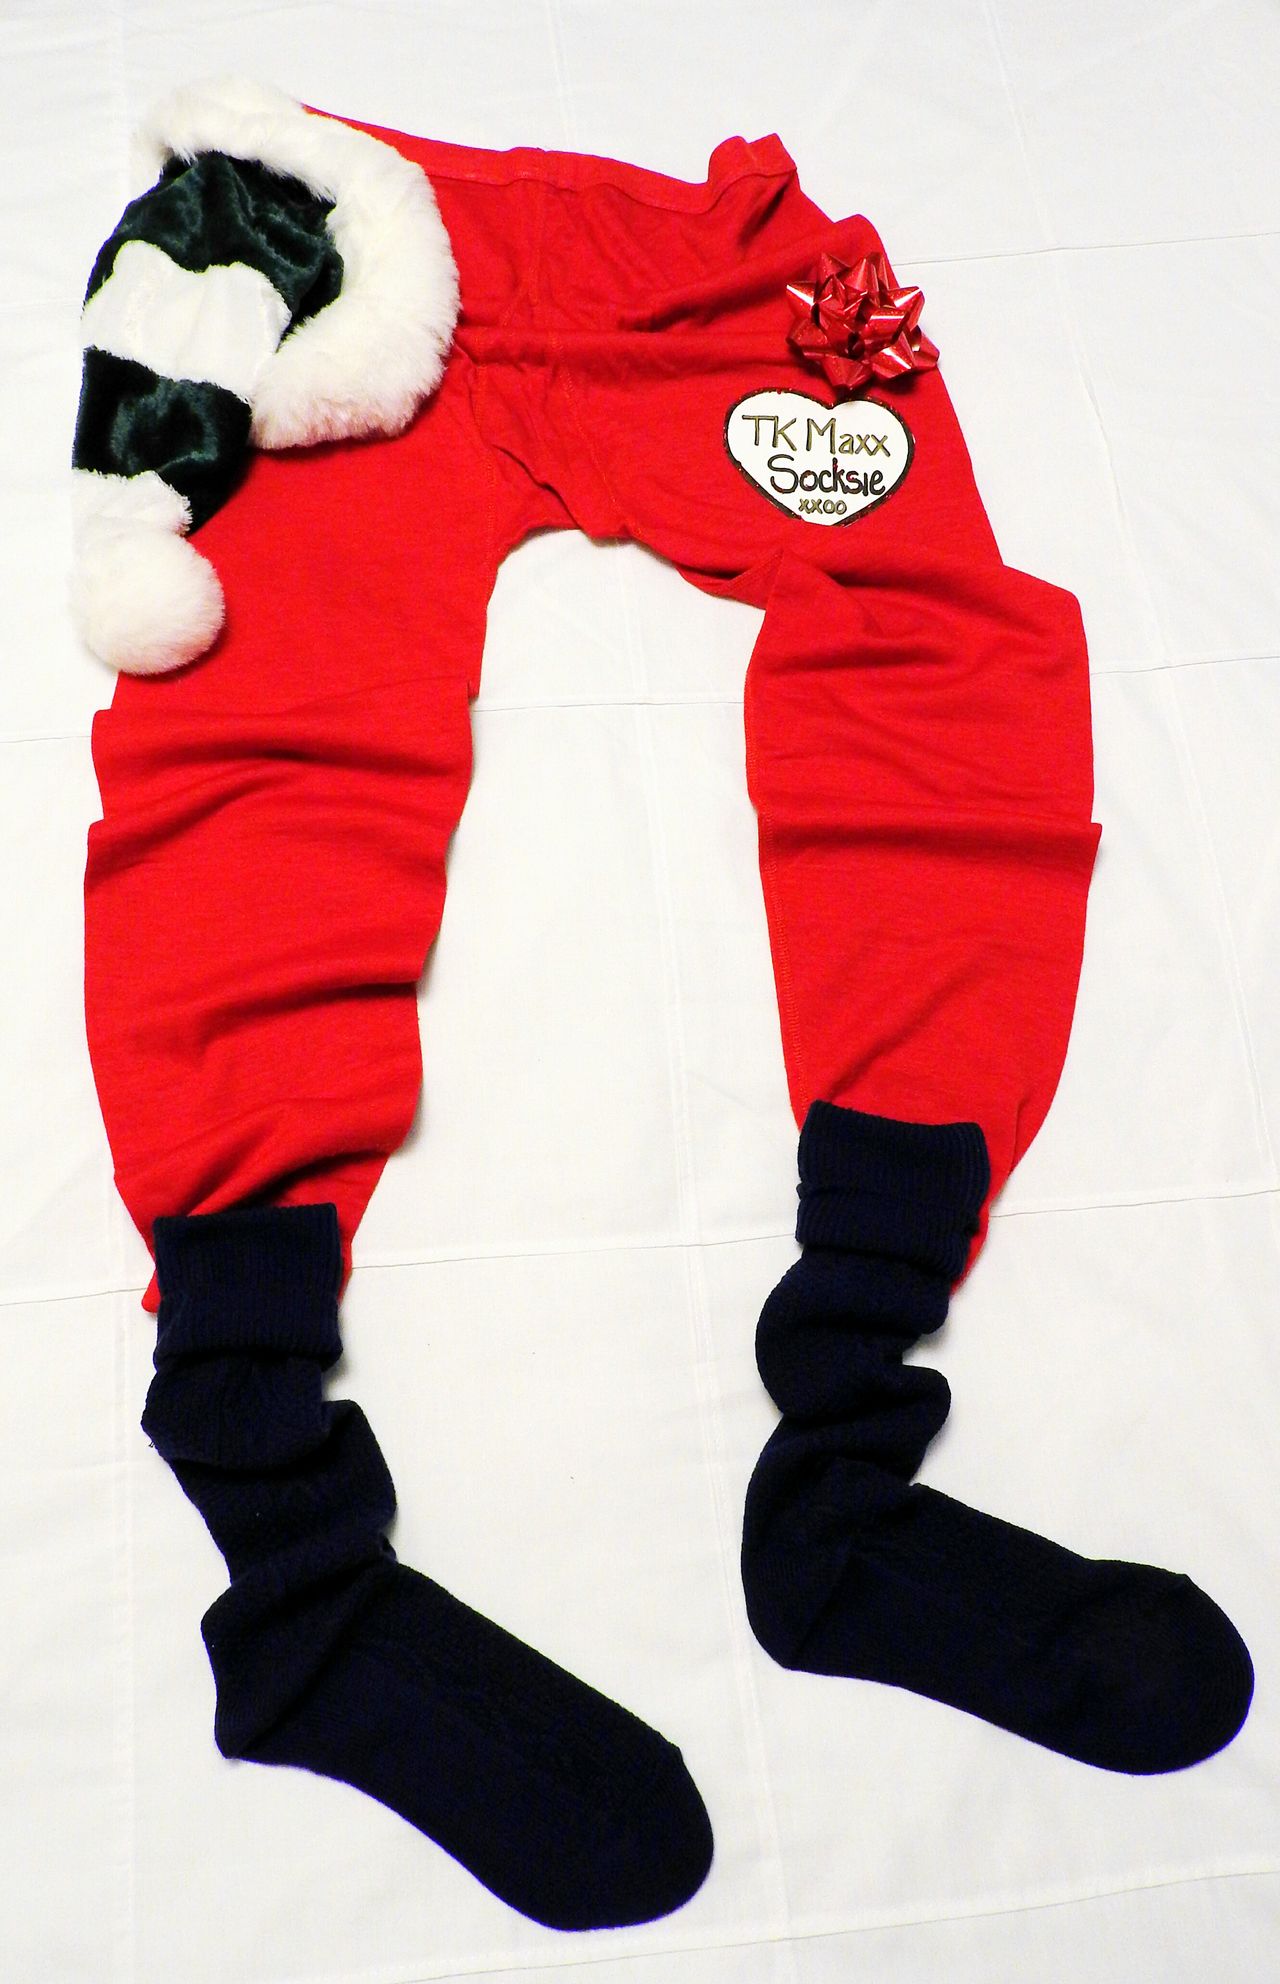 Santa's underwear